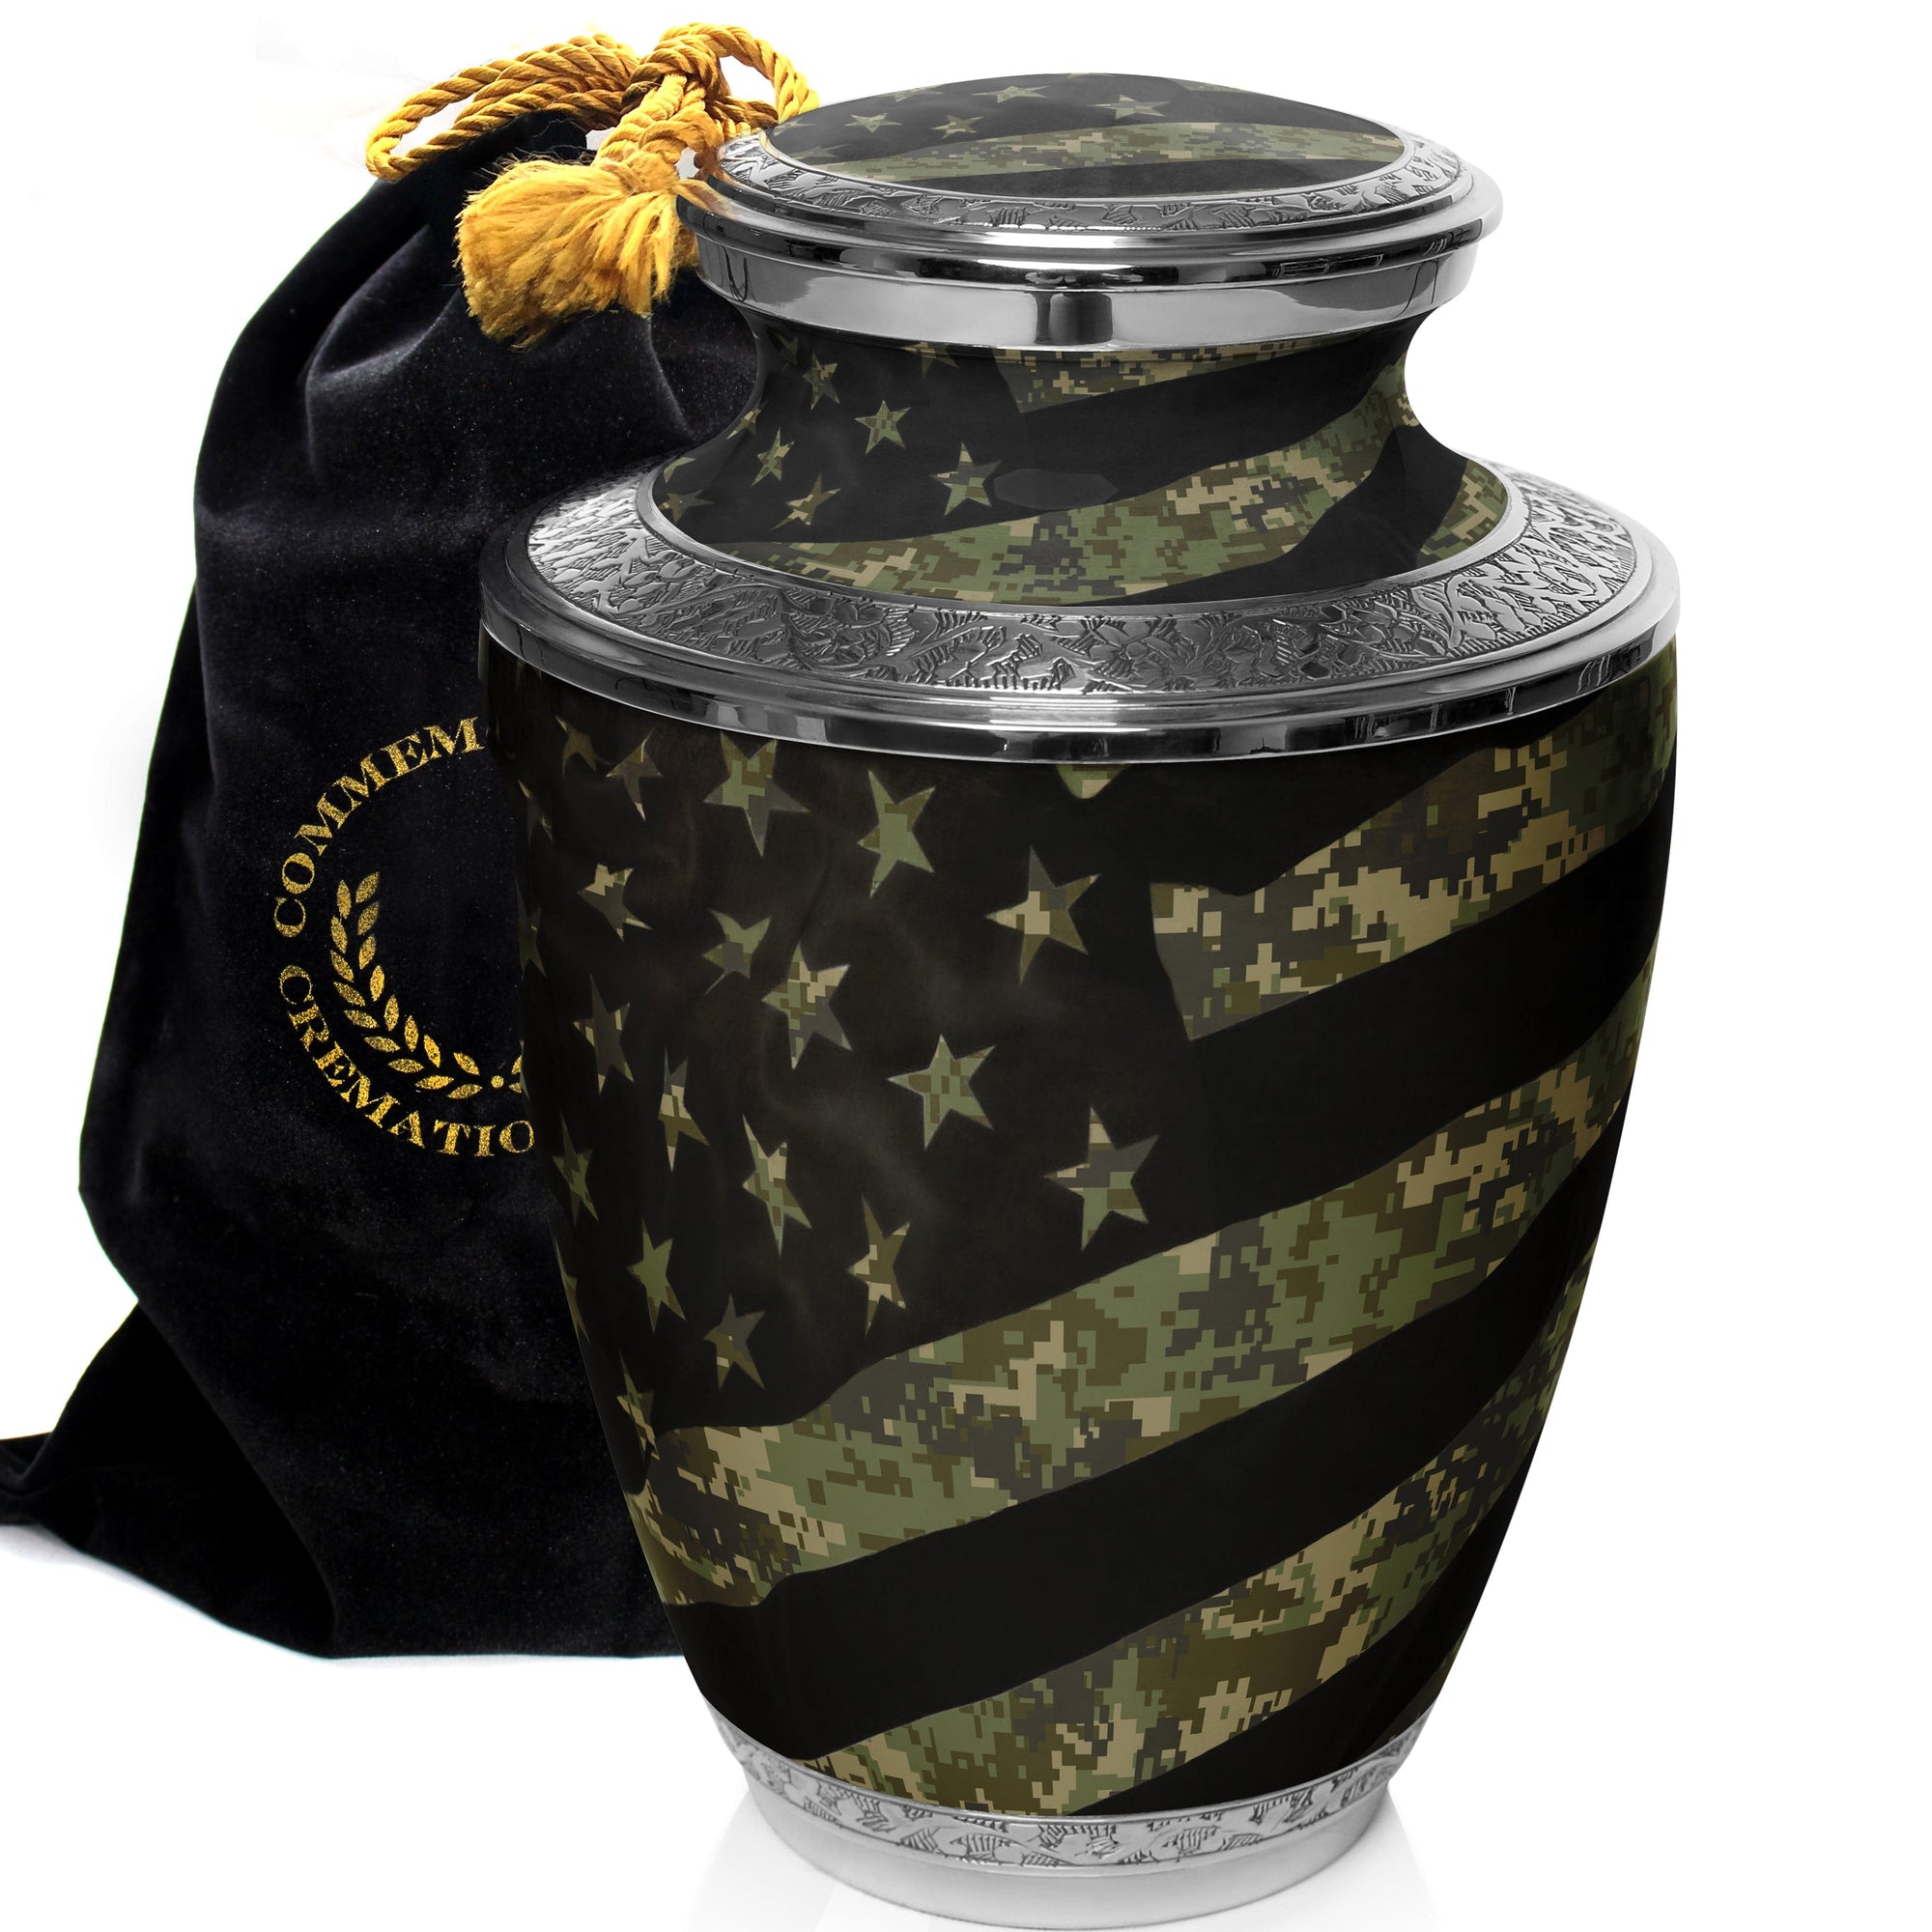 Commemorative Cremation Urns Home & Garden Digital Camouflage Flag Military Cremation Urn